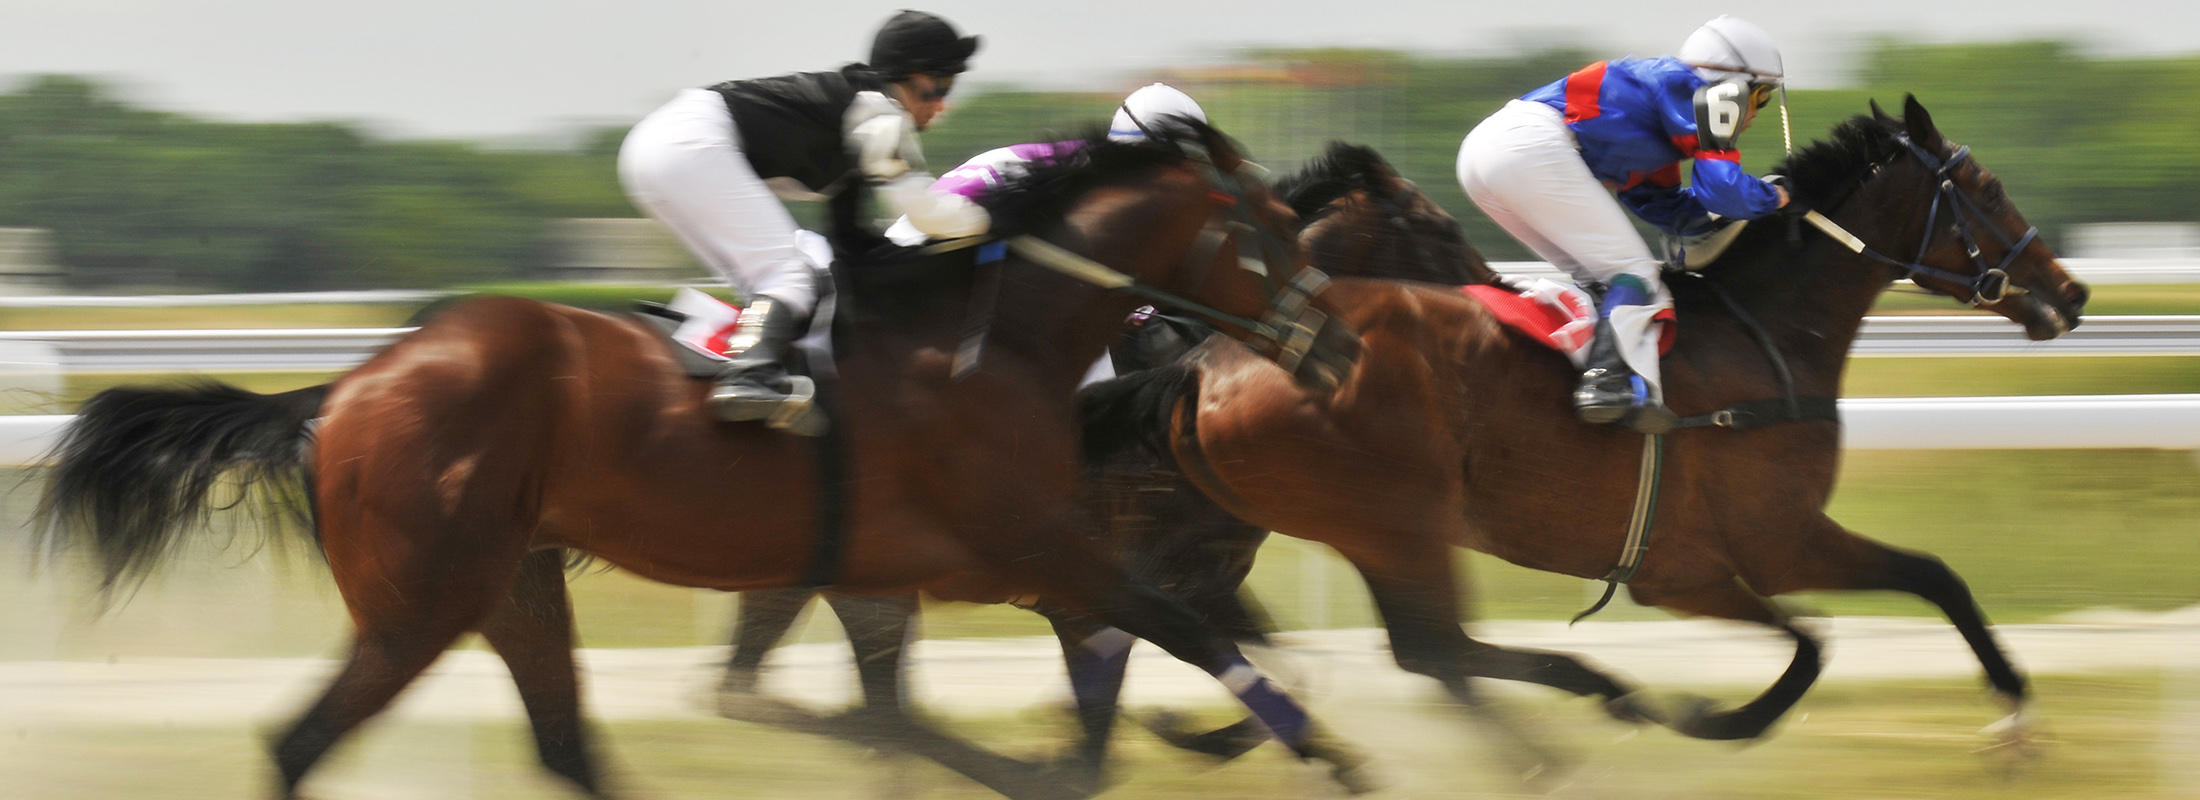 Racing jockeys and horses running on race track